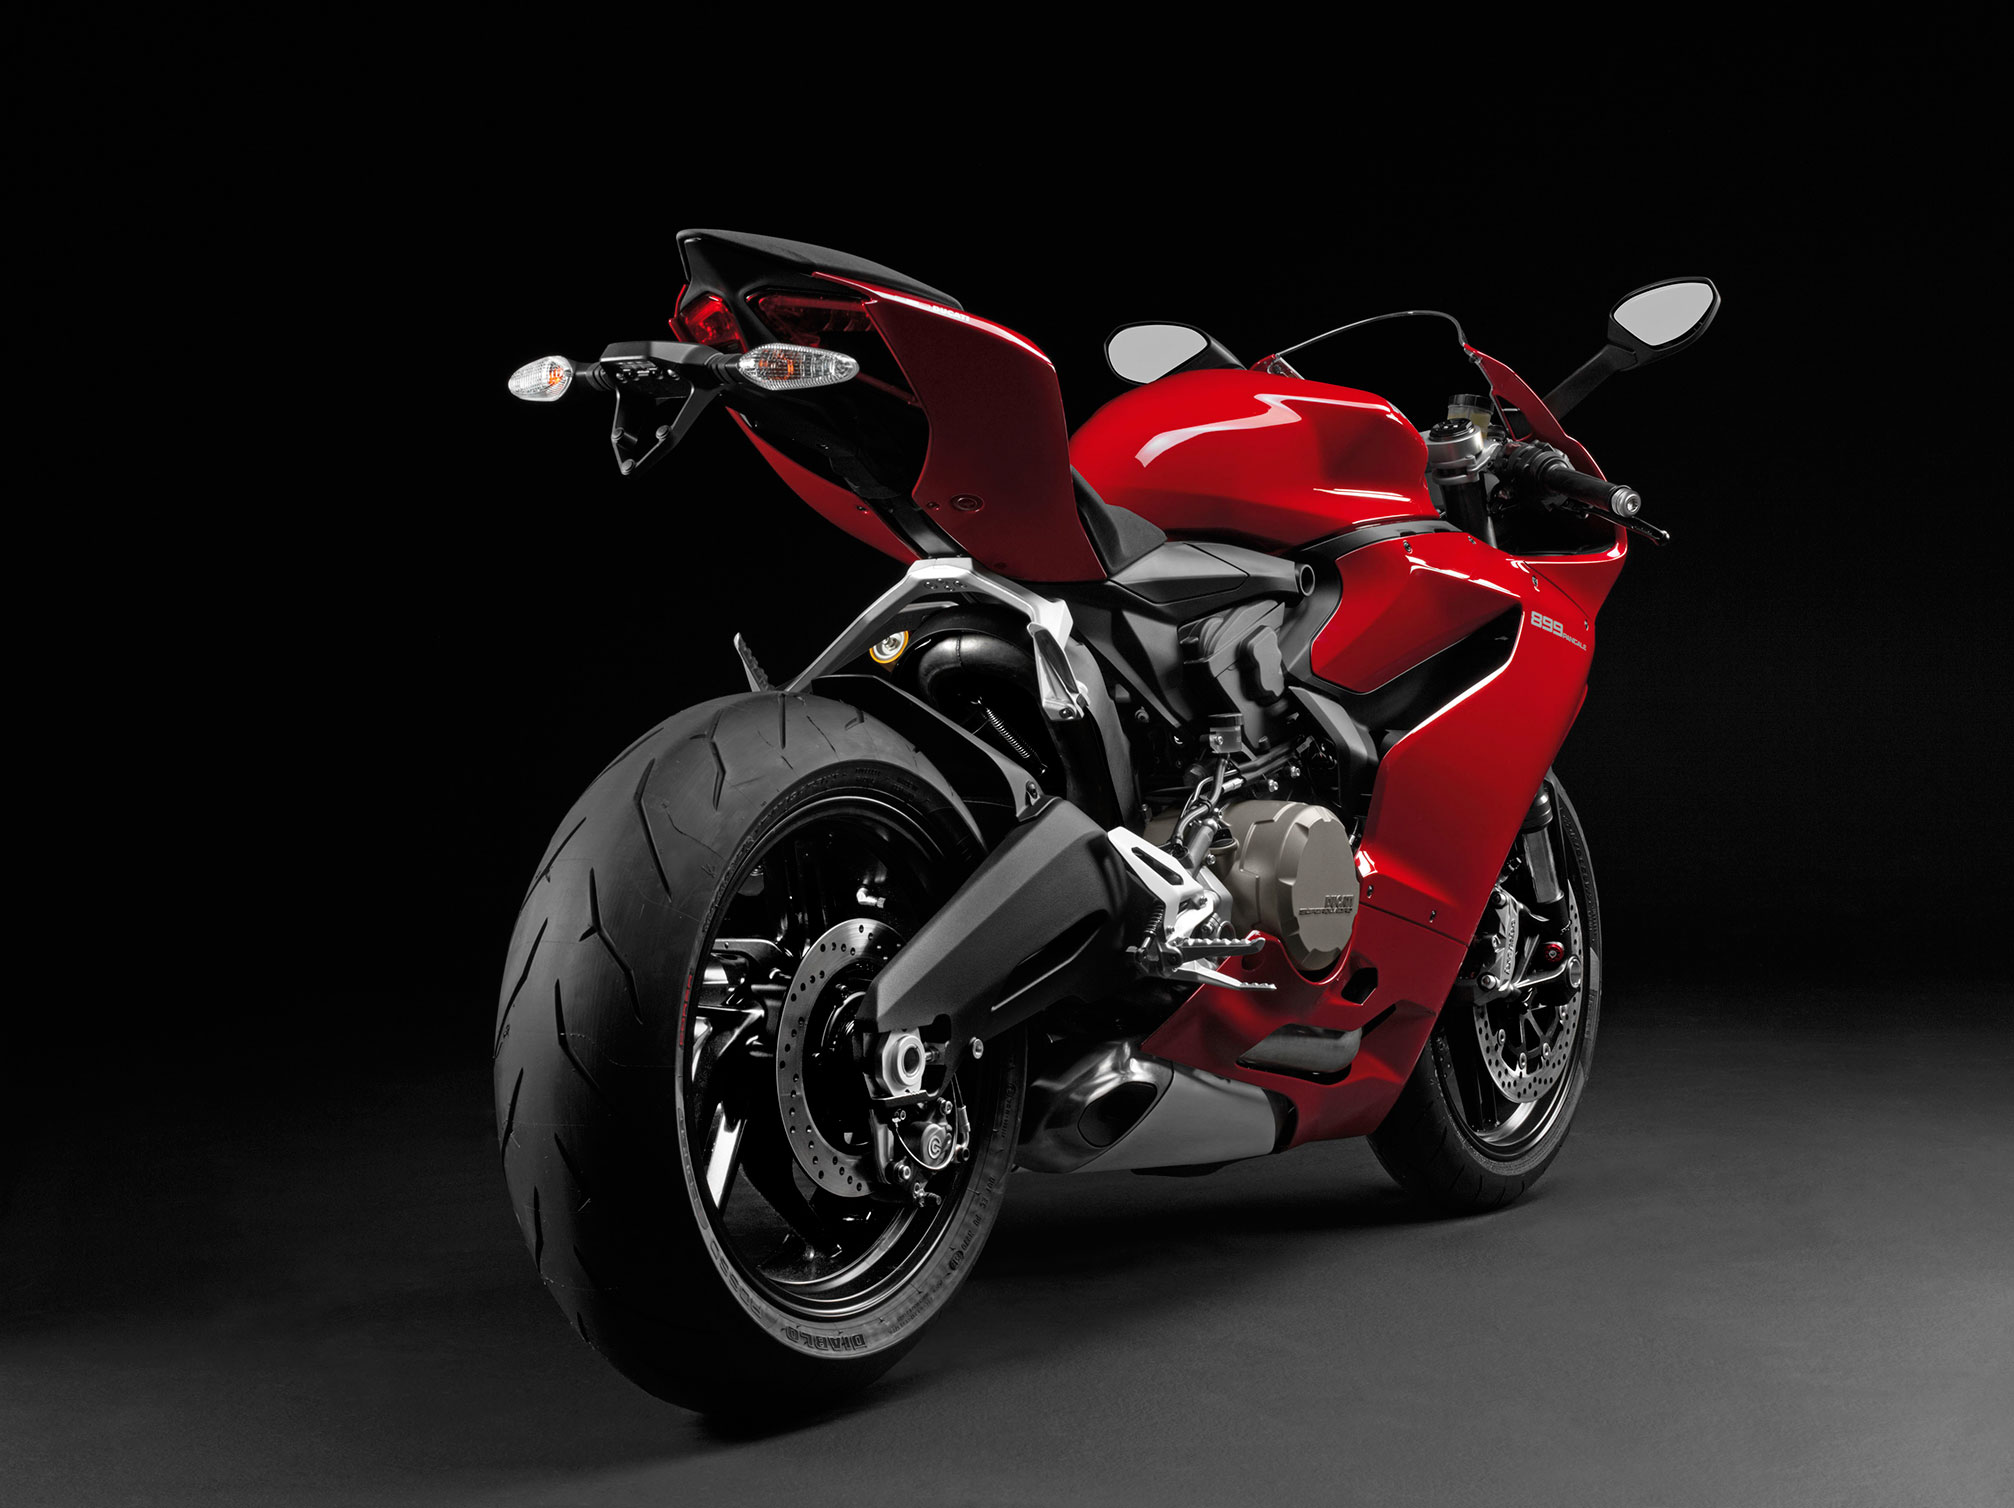 2014 Ducati Superbike 899 Panigale g wallpaper 2014x1508